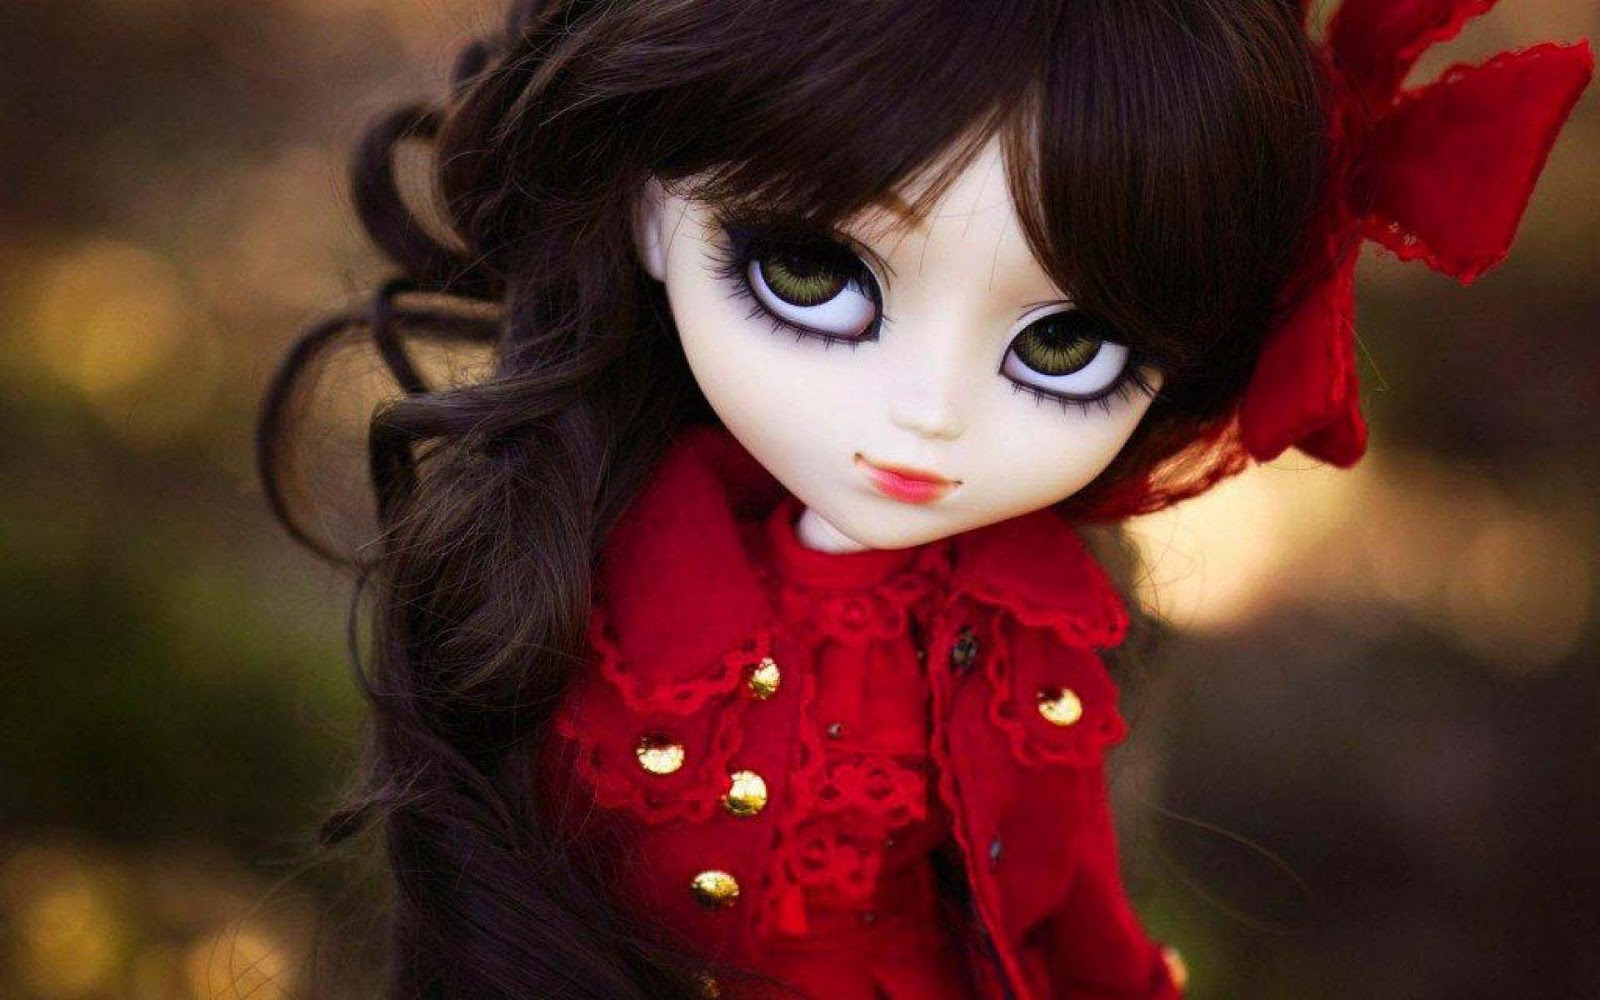 lovely doll in red dress